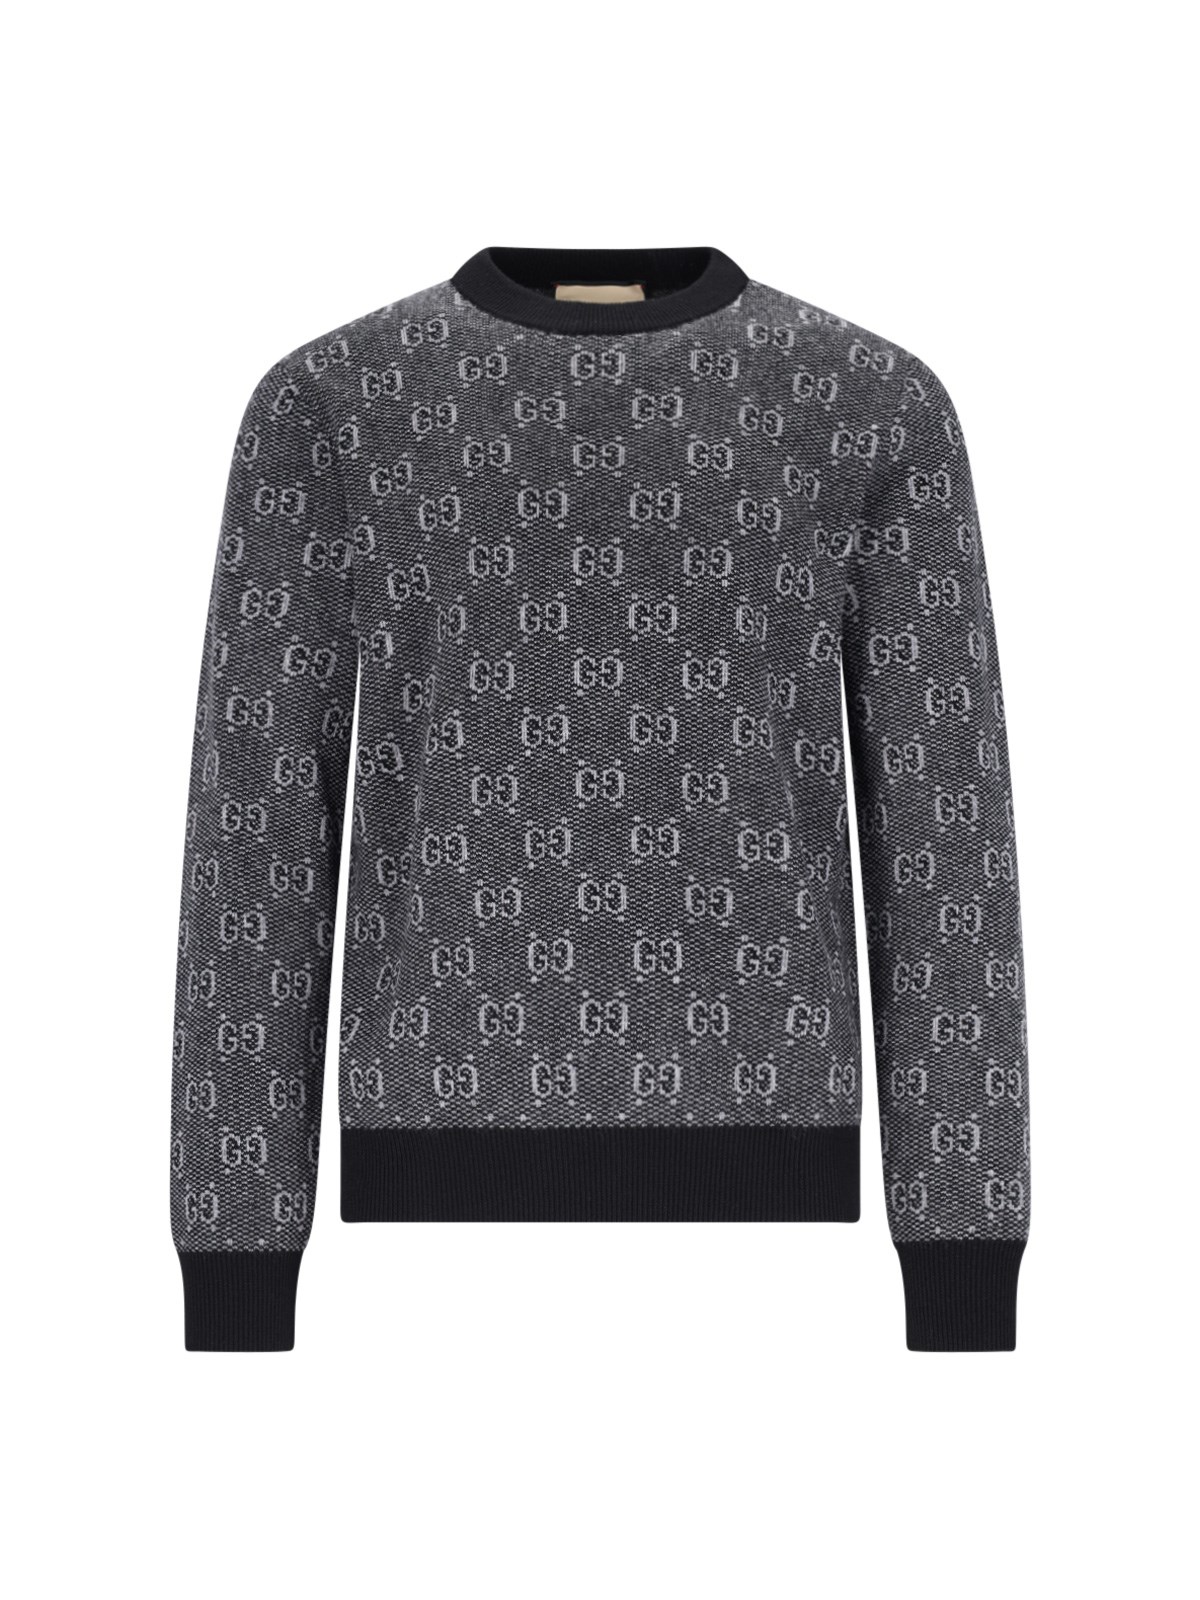 Gucci 'gg' Jacquard Sweater In Gray